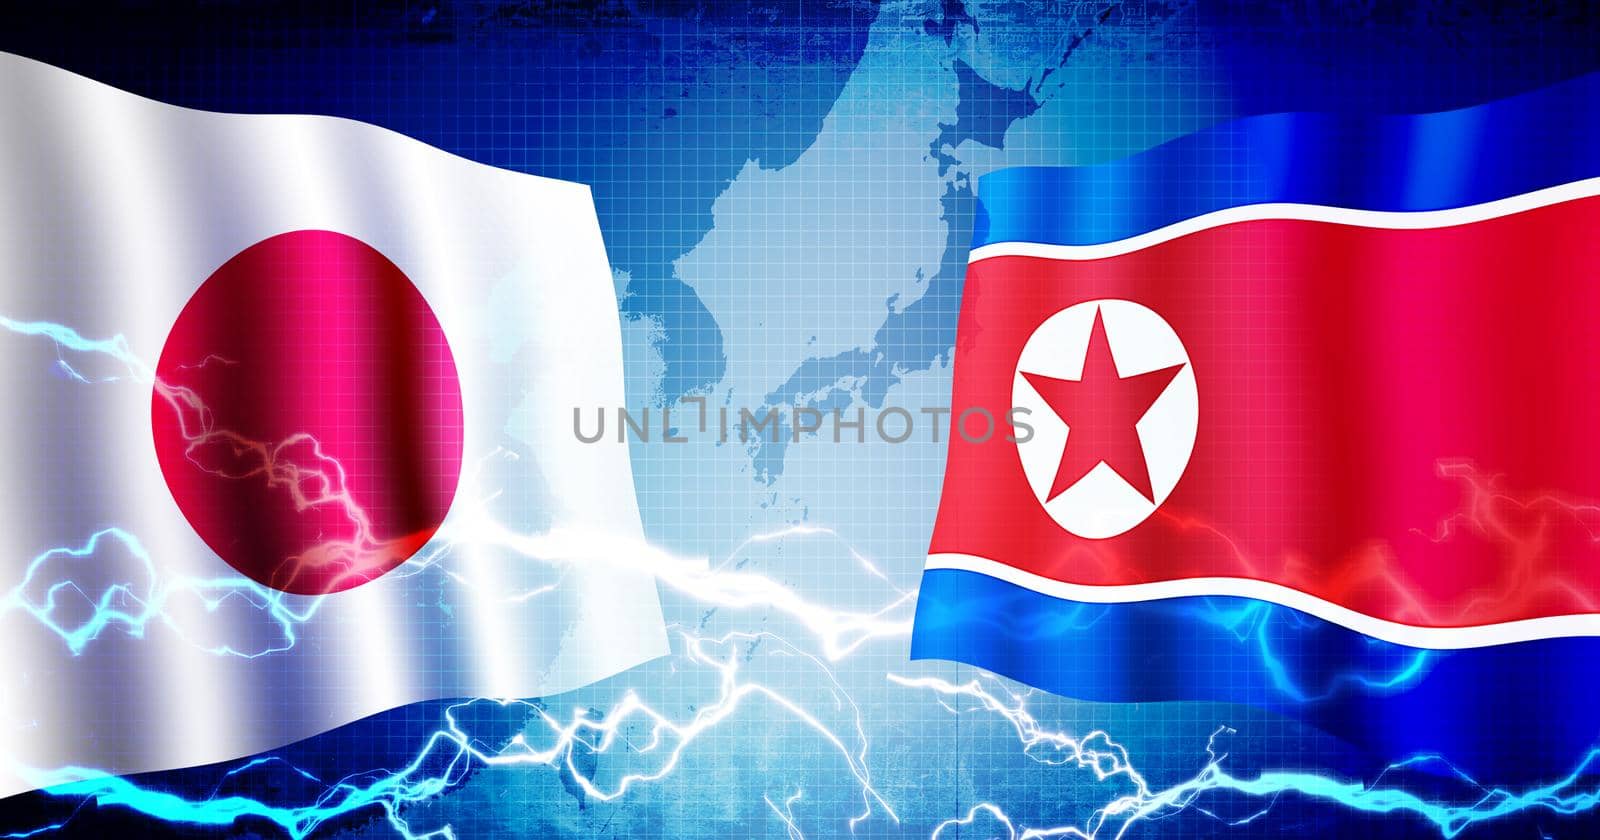 Political confrontation between Japan and North korea / web banner background illustration